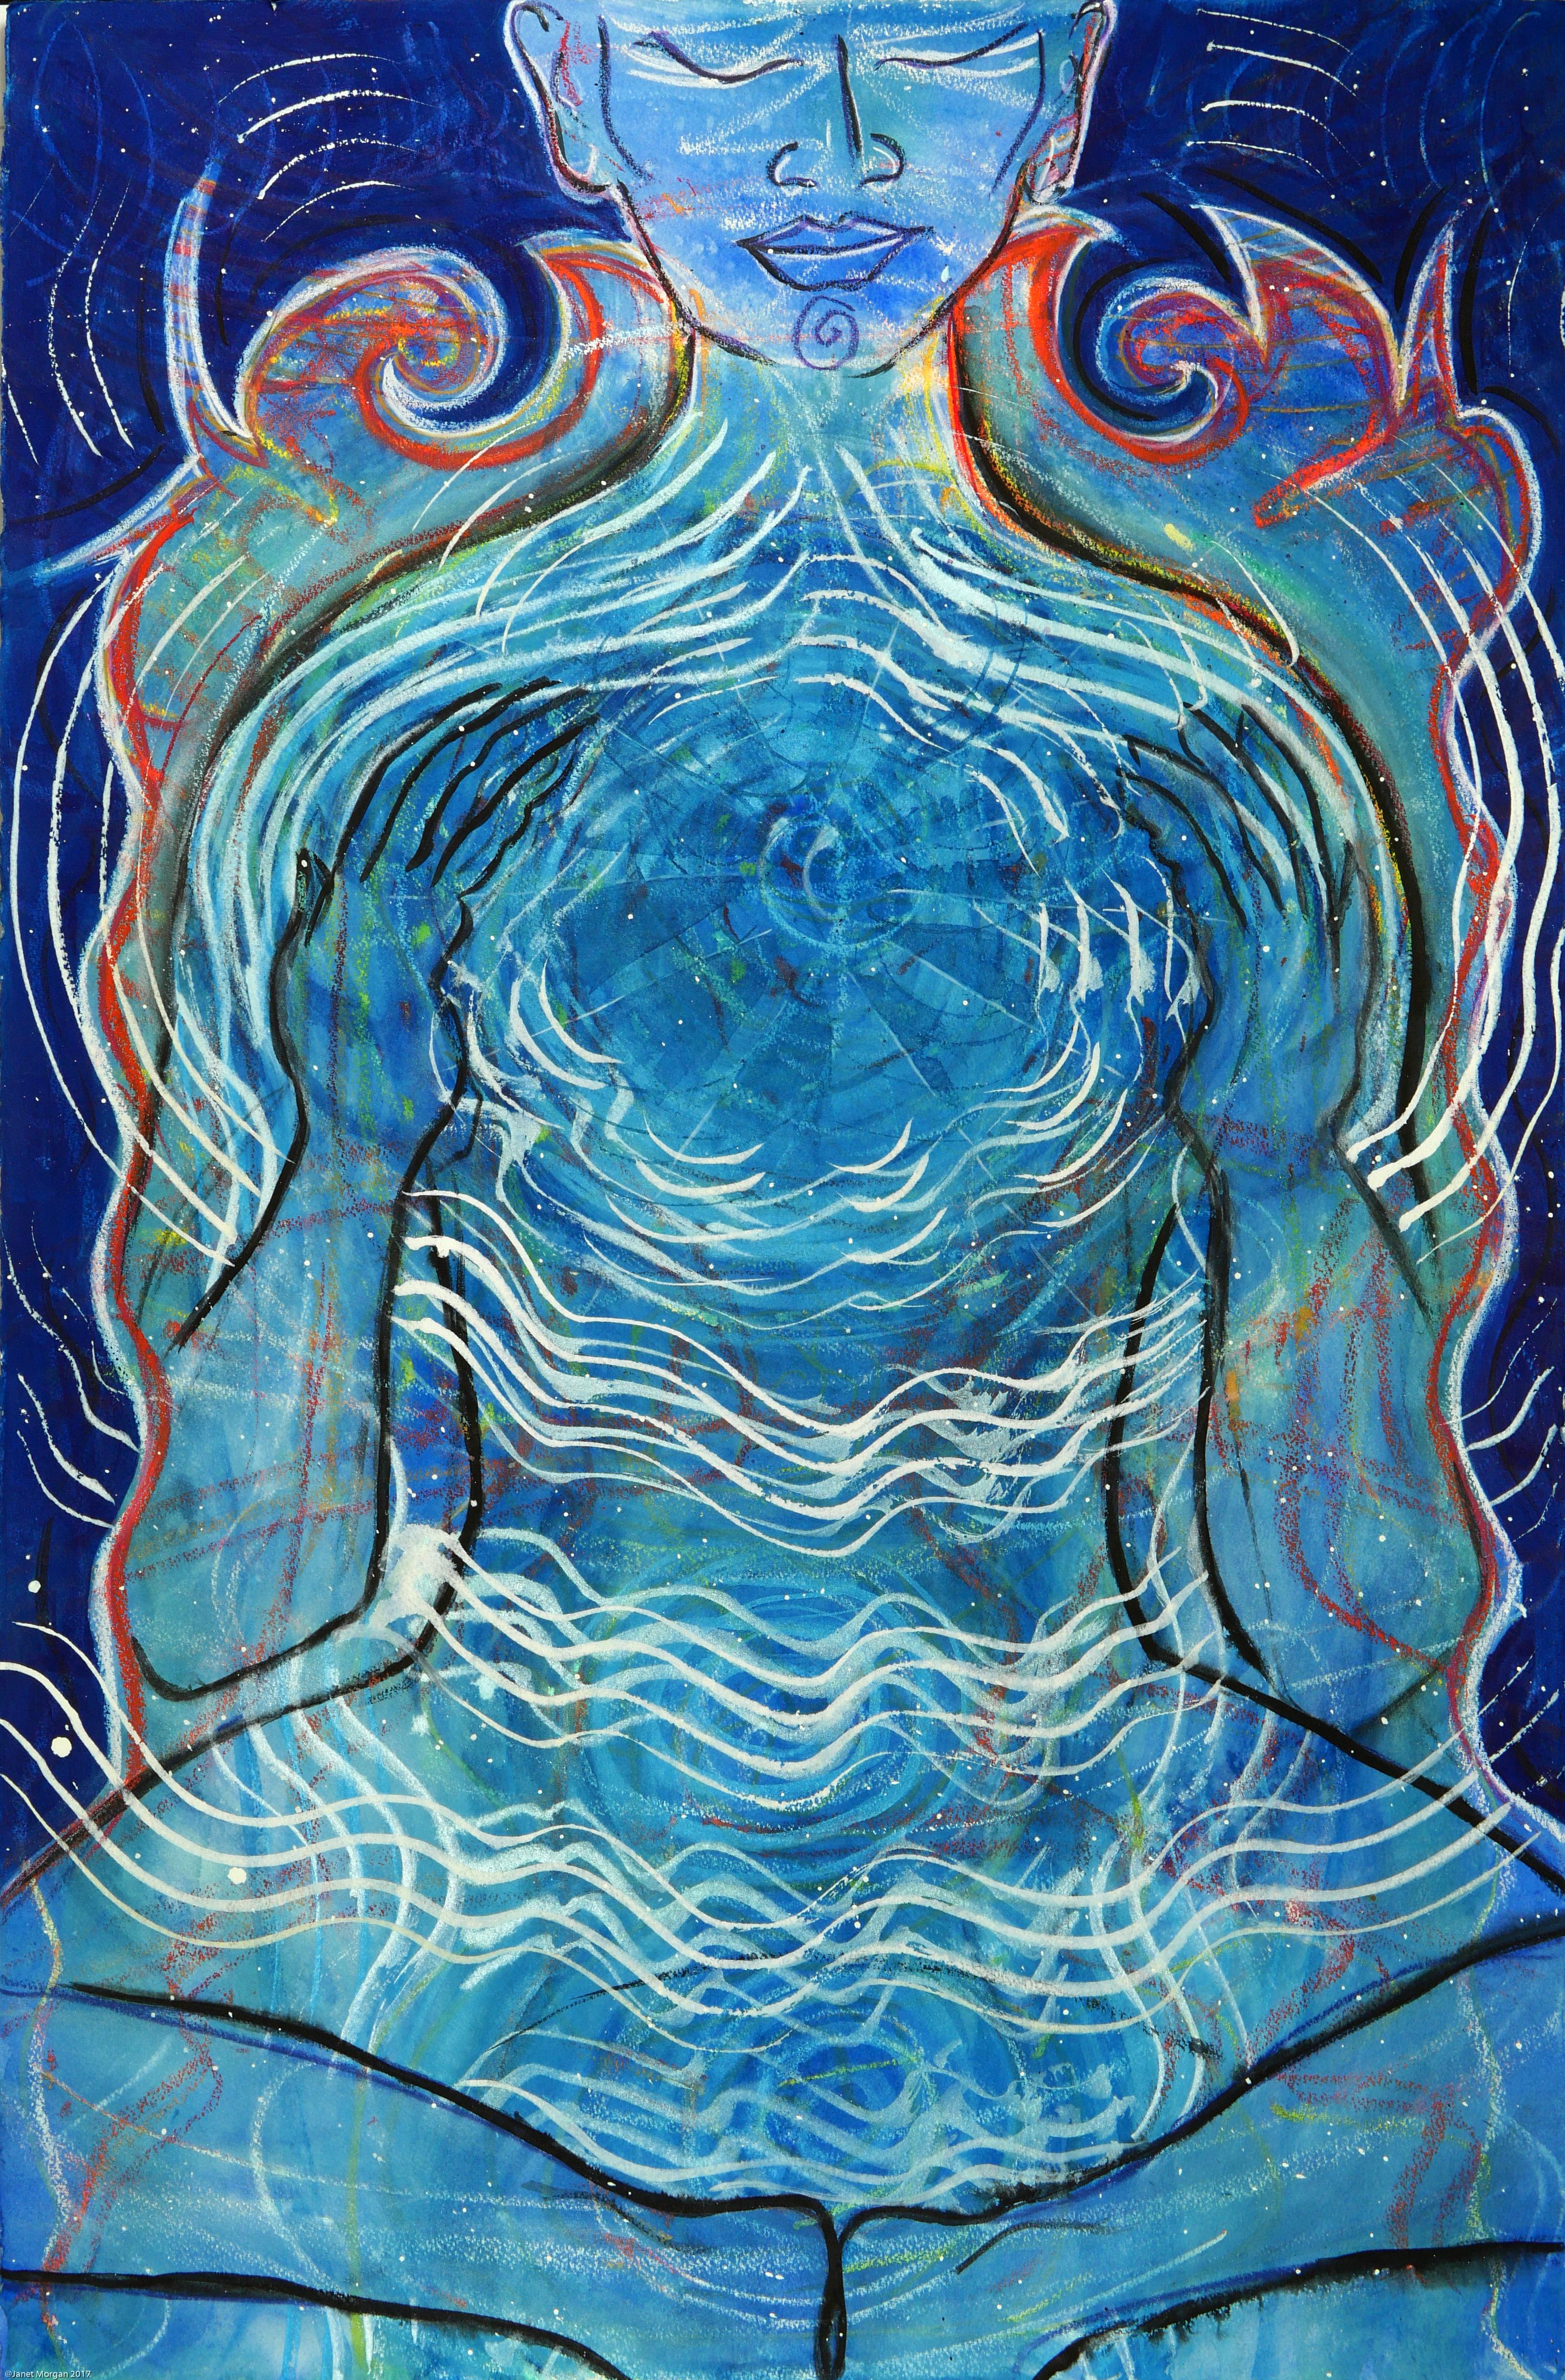 Janet Morgan Figurative Painting - Open Heart, Vibrant blues, Eastern spiritual, figure